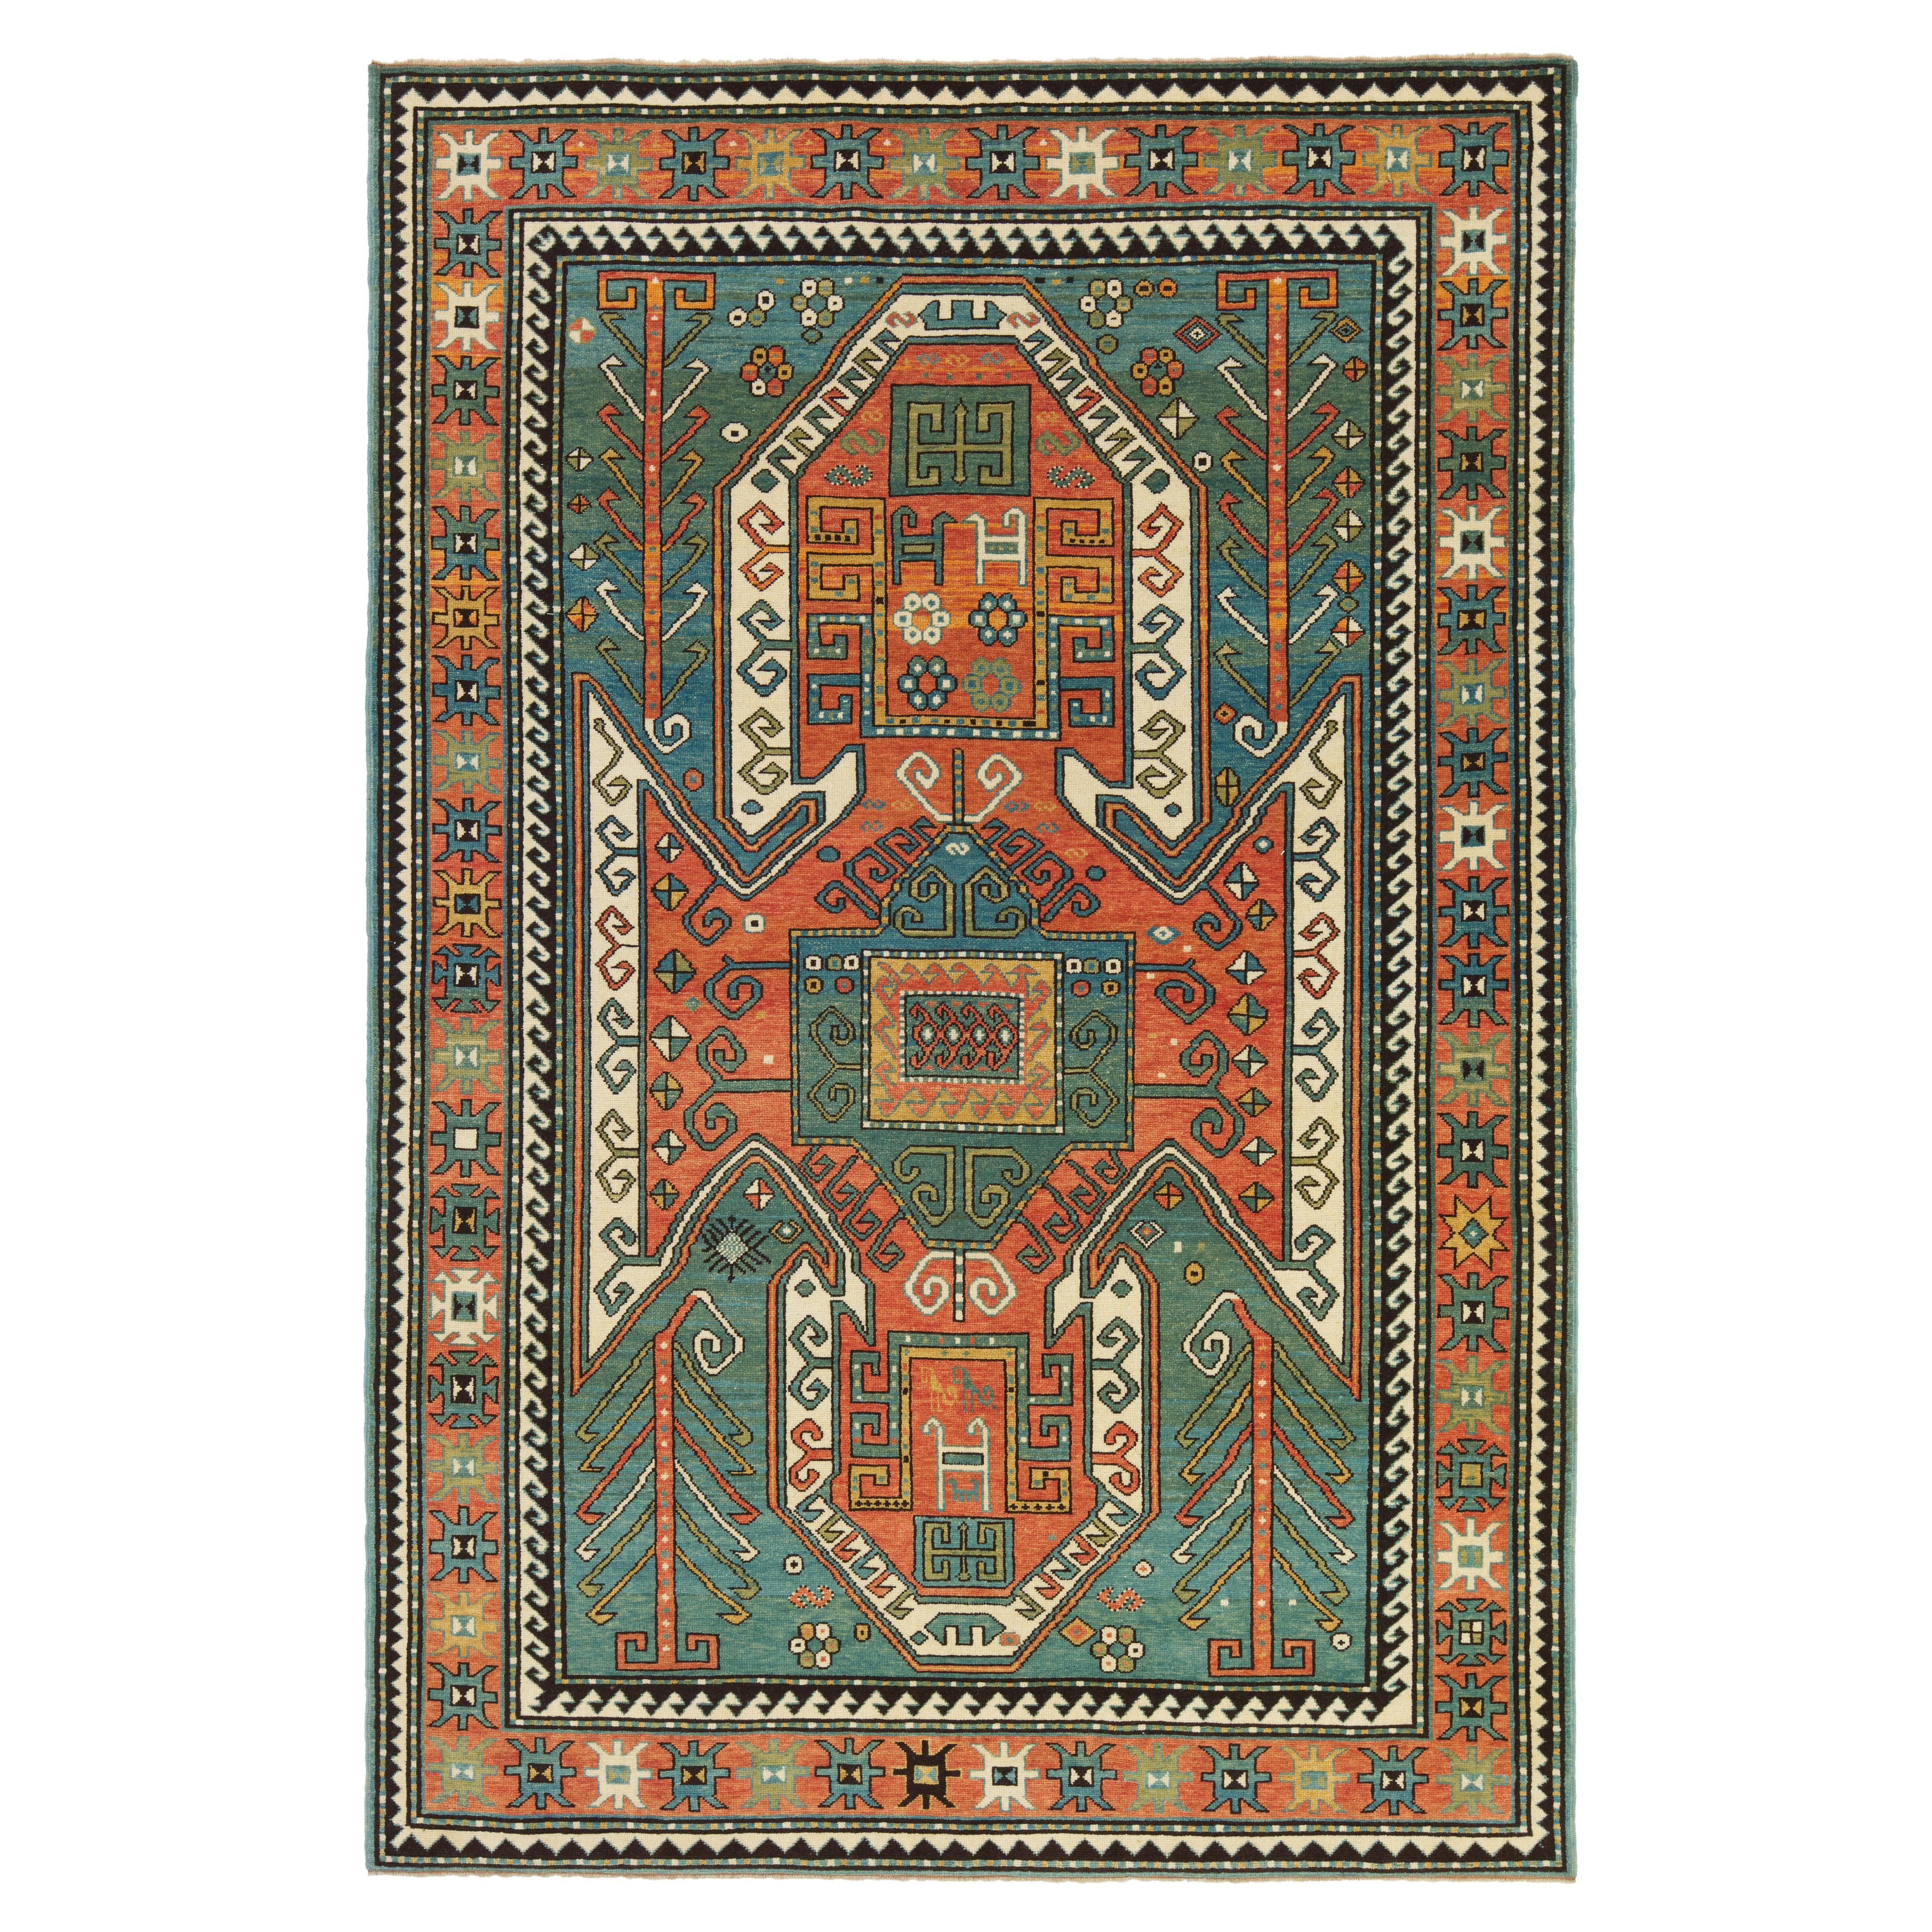 Ararat Rugs Sewan Kazak Rug, 19th Century Caucasian Revival Carpet Natural Dyed